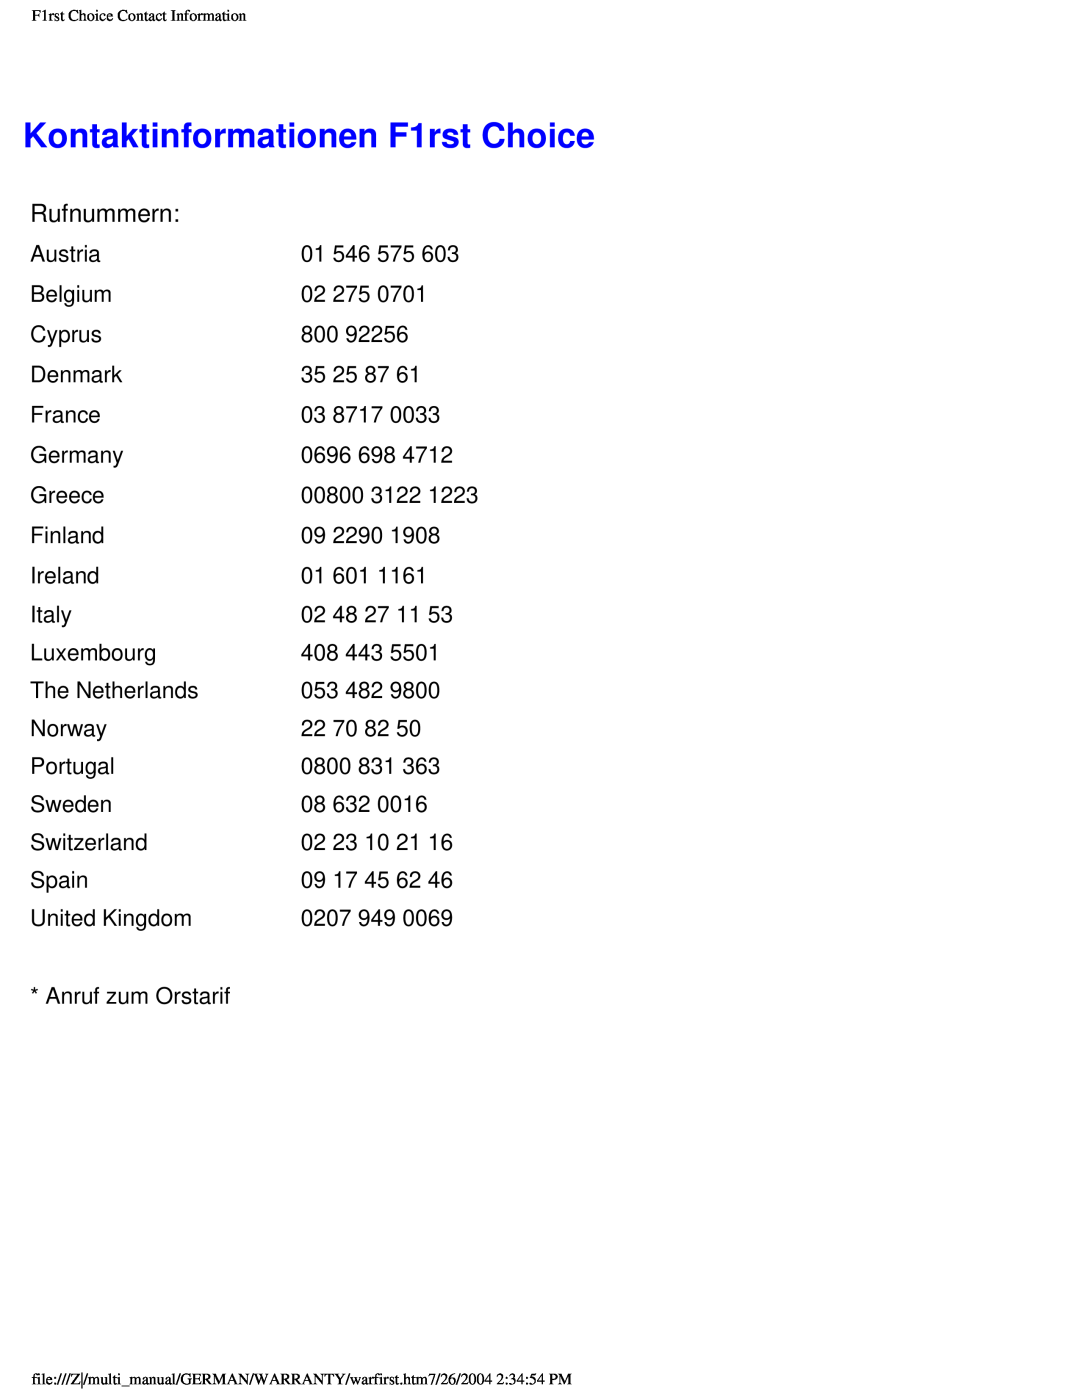 Philips 107X2 user manual Kontaktinformationen F1rst Choice, Rufnummern 